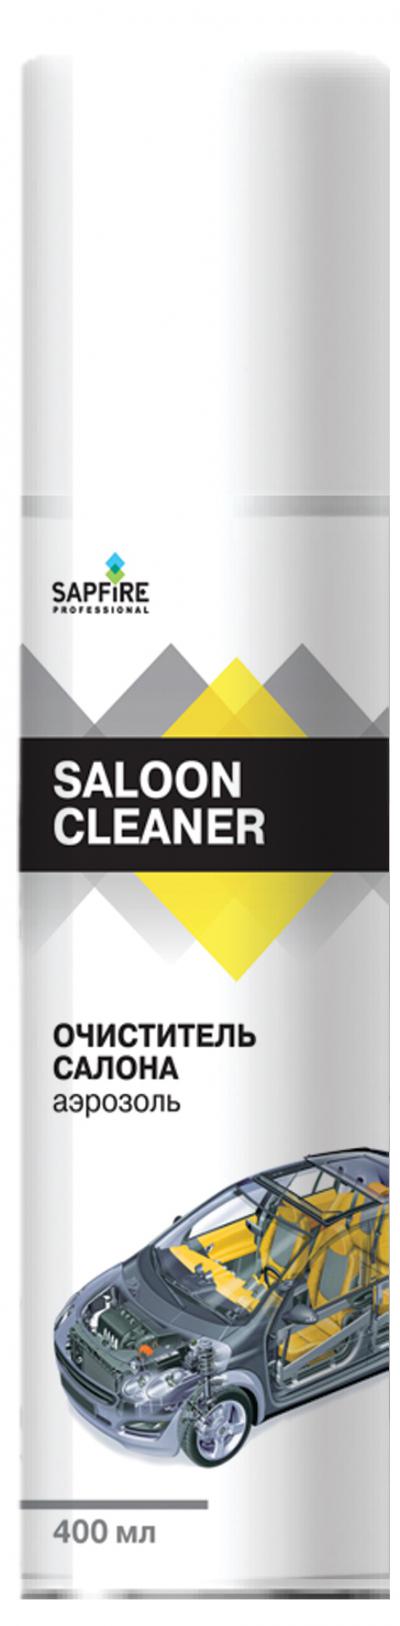 Очиститель салона аэрозоль Saloon Cleaner SAPFIRE.